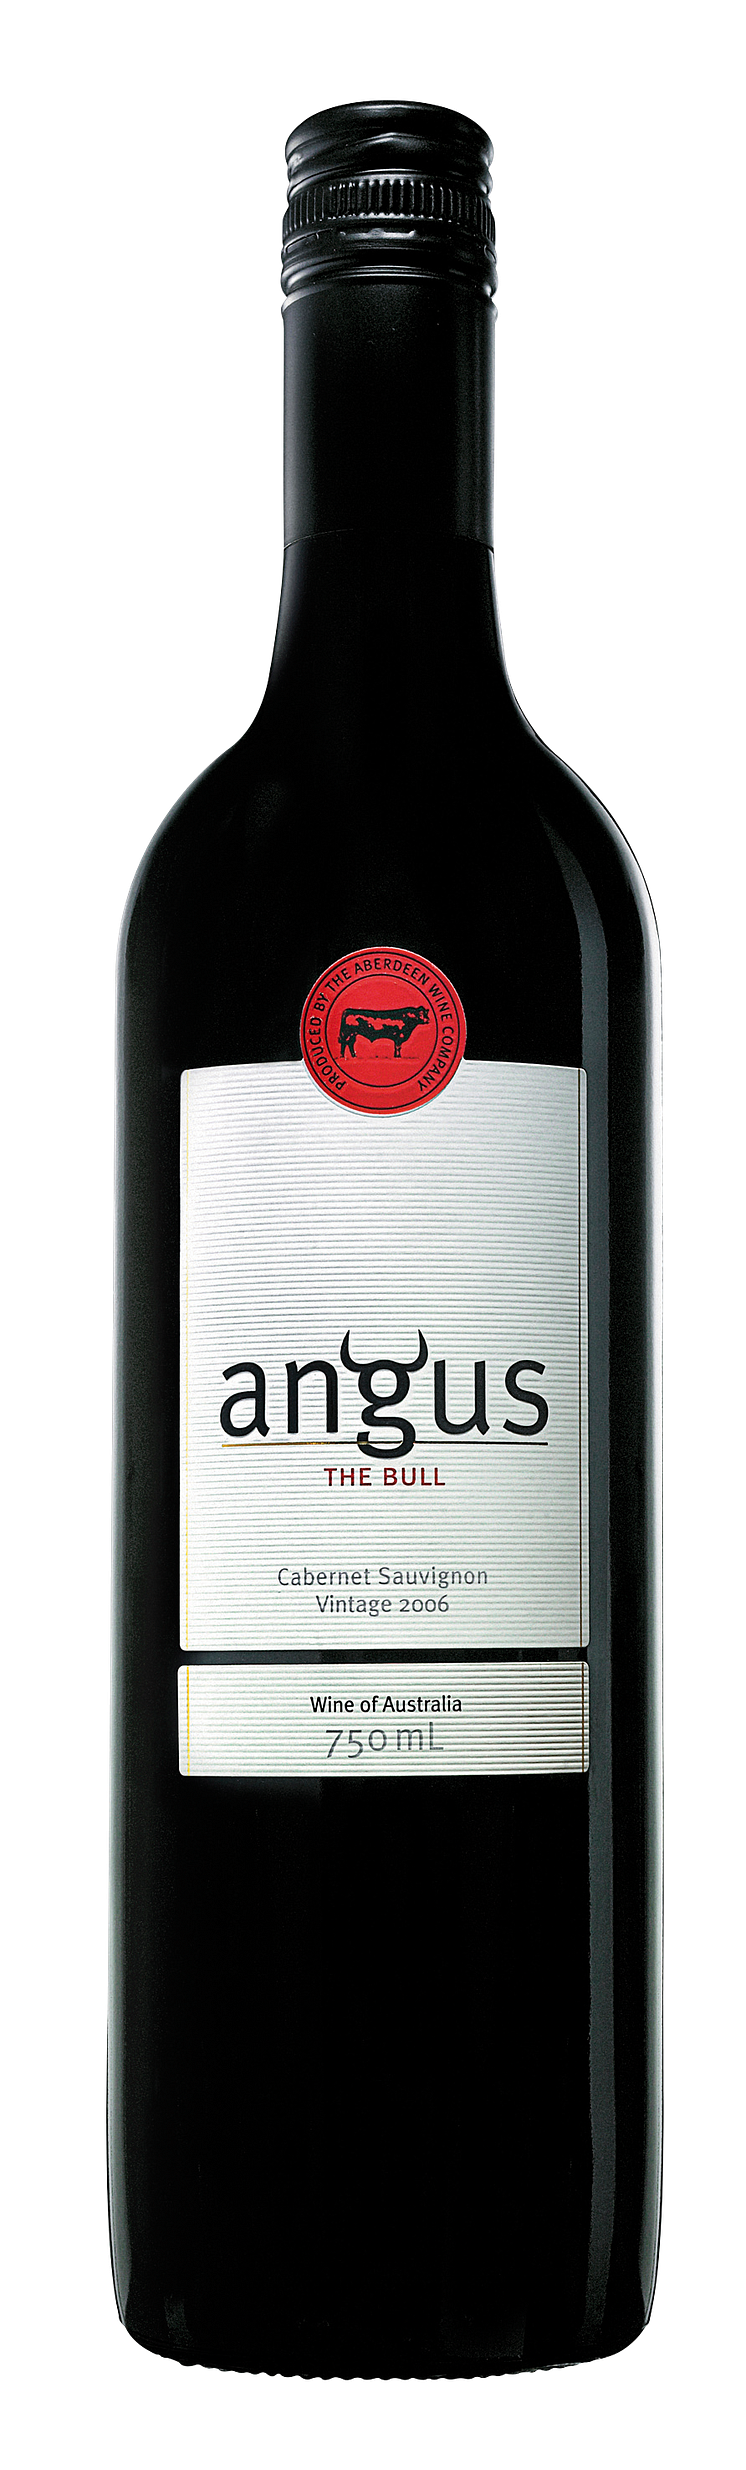 Angus the bull